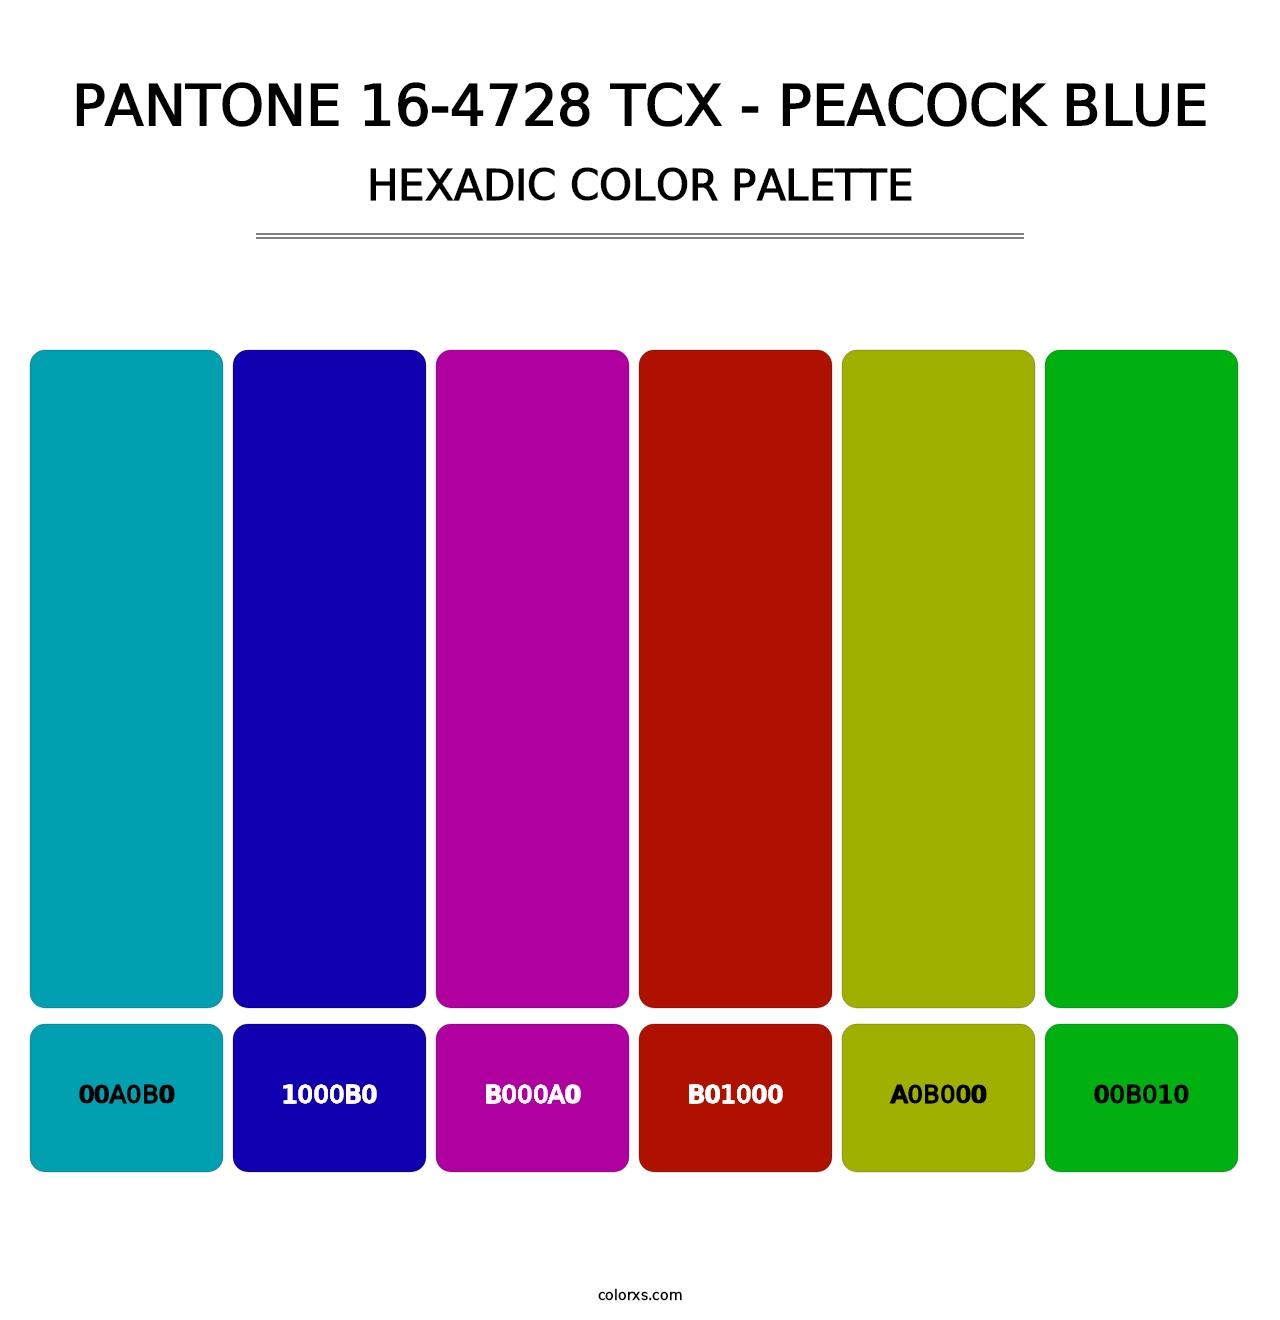 PANTONE 16-4728 TCX - Peacock Blue - Hexadic Color Palette